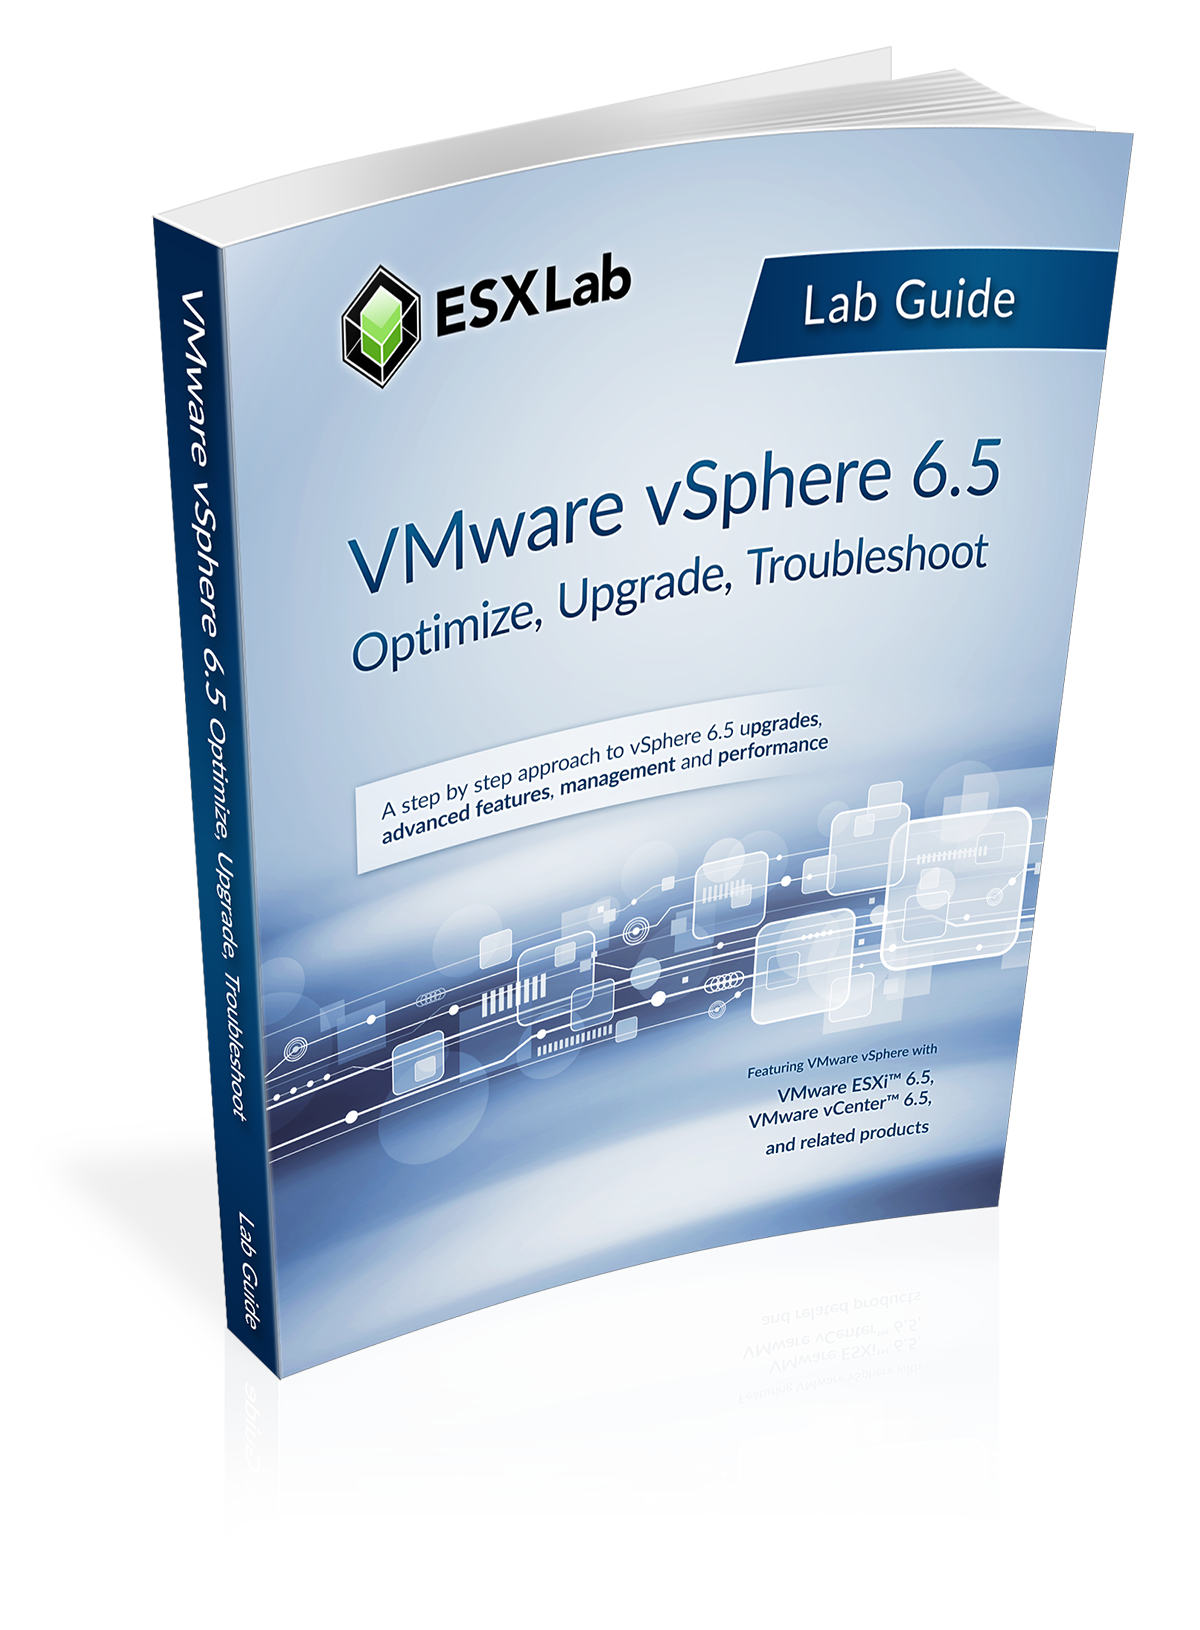 VMware vSphere 6.5 Optimize, Upgrade, Troubleshoot Lab Guide